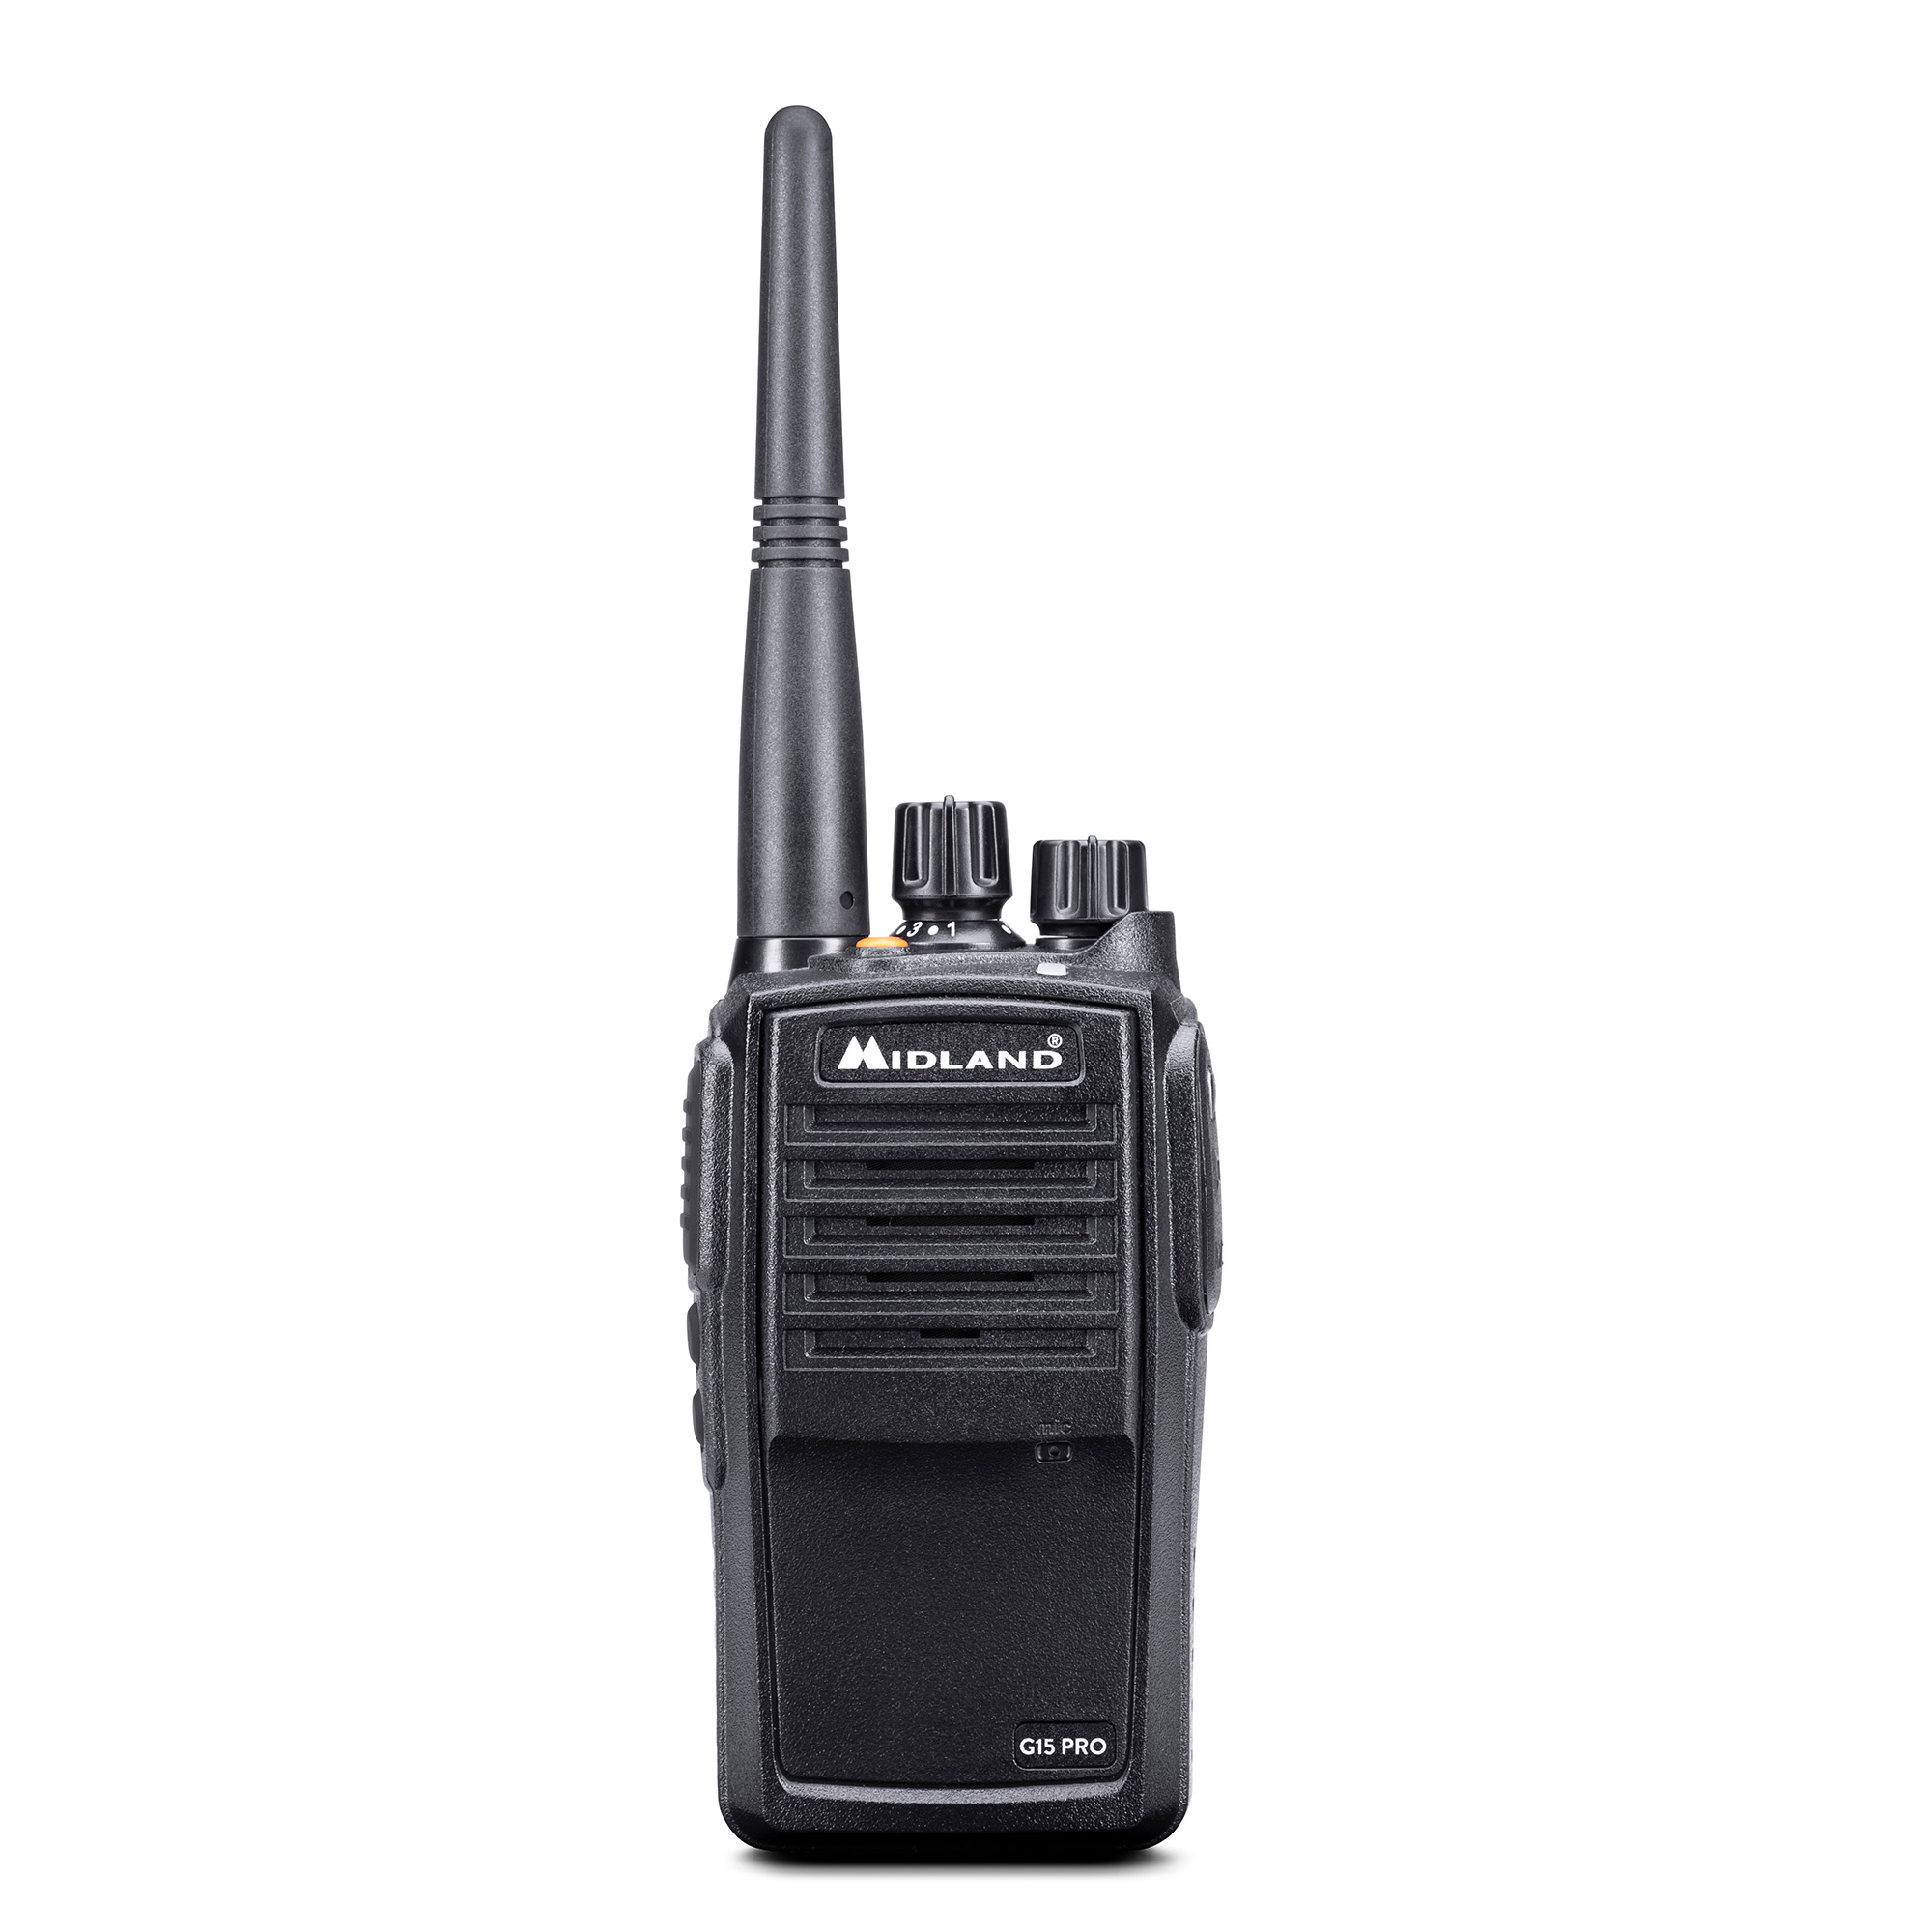 Statie radio PMR portabila Midland G15 Pro waterproof IP67 Cod C1127.03